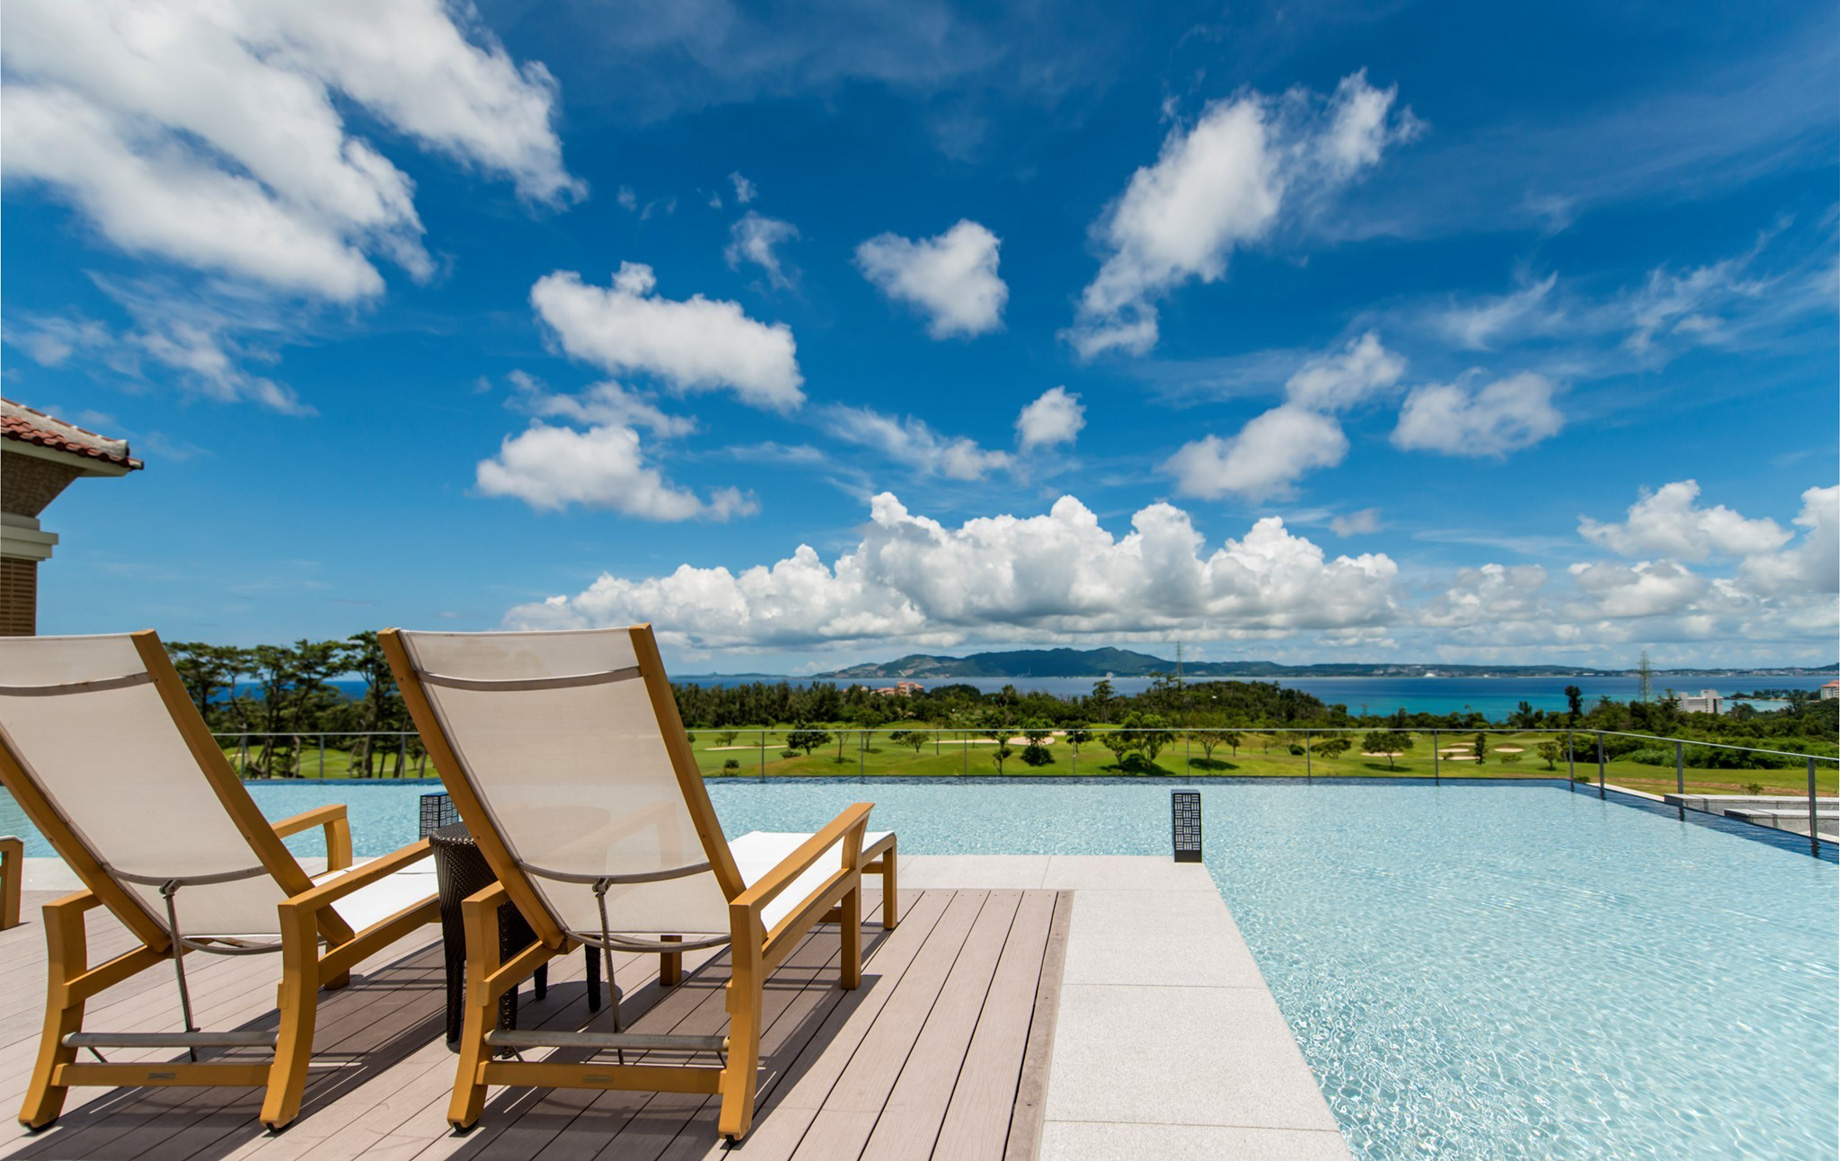 The Ritz-Carlton, Okinawa Hotel – Okinawa, Japan – Exterior Pool Deck View